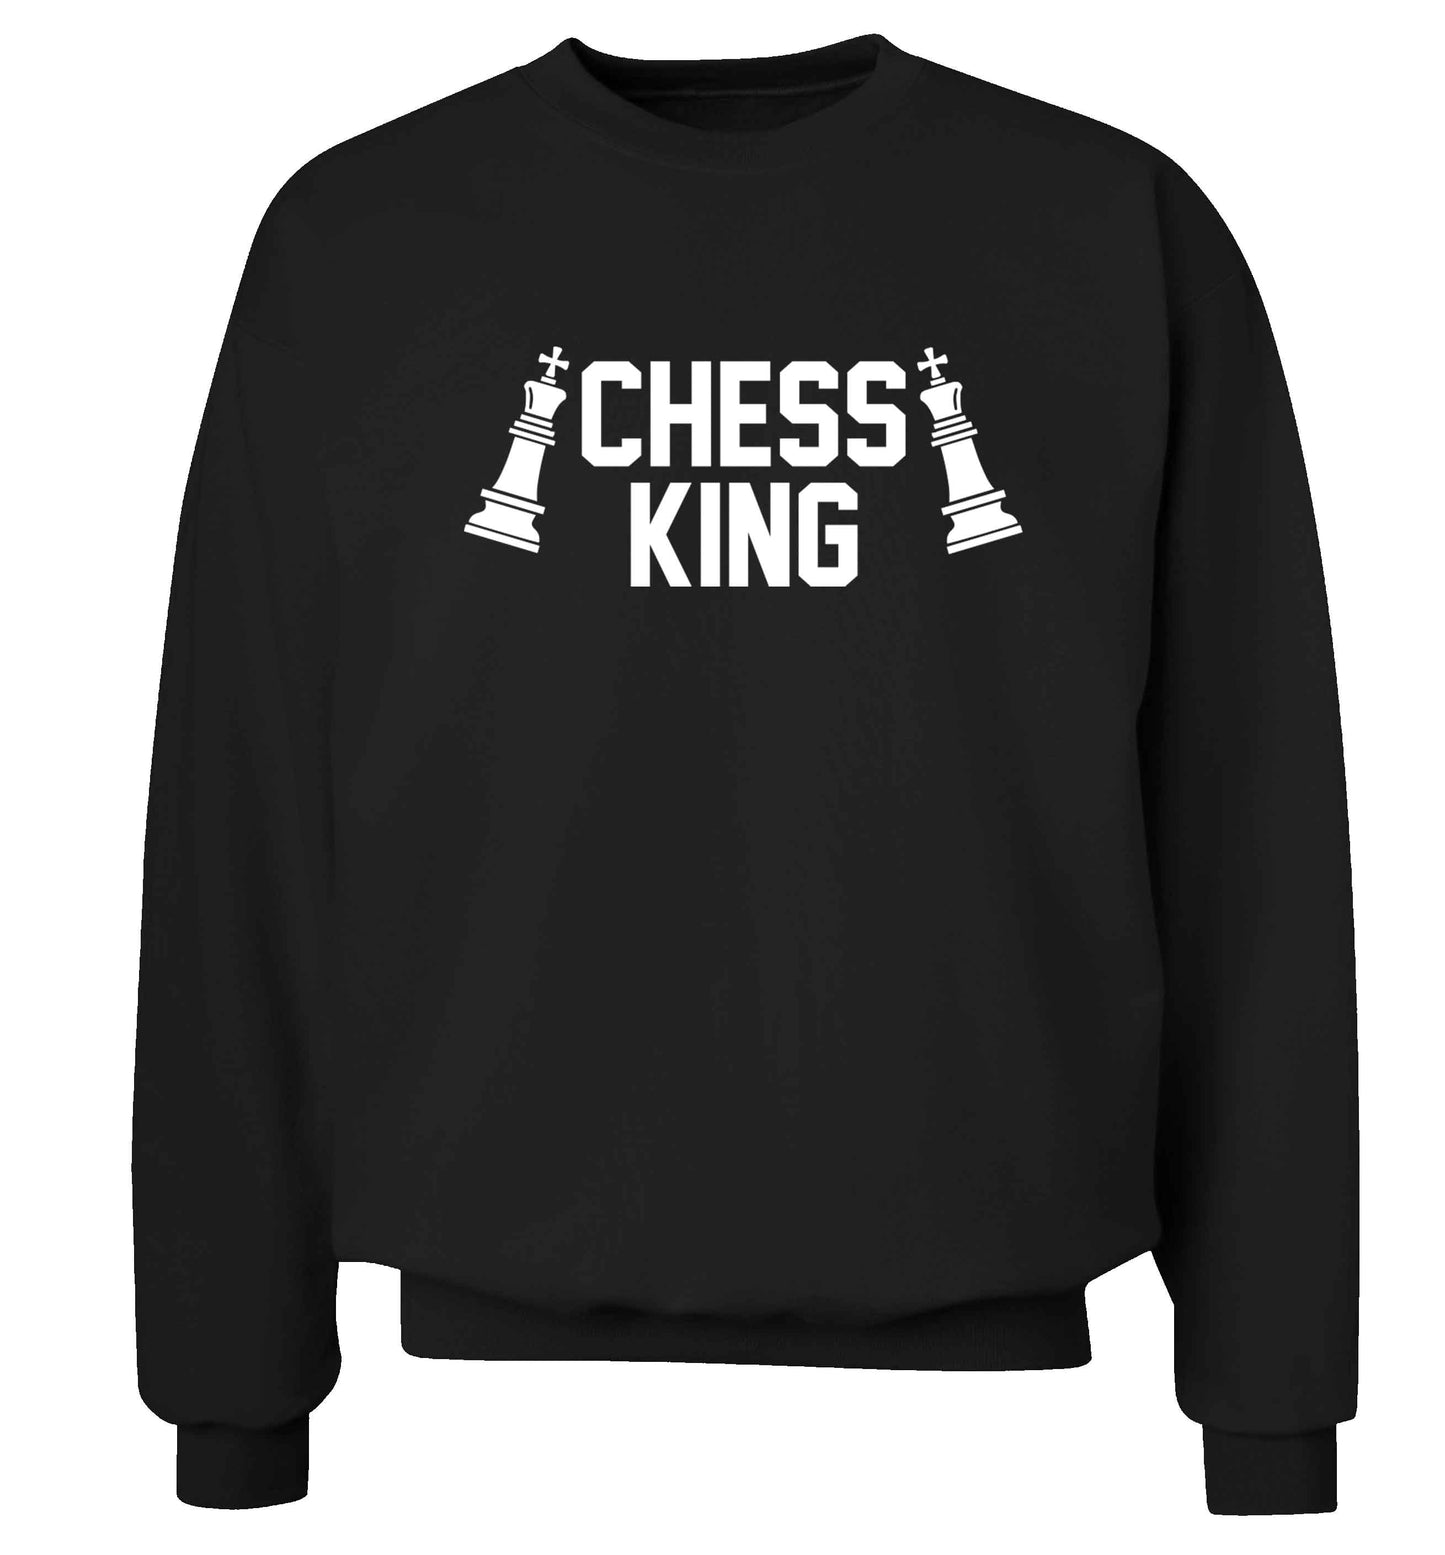 Chess king Adult's unisex black Sweater 2XL